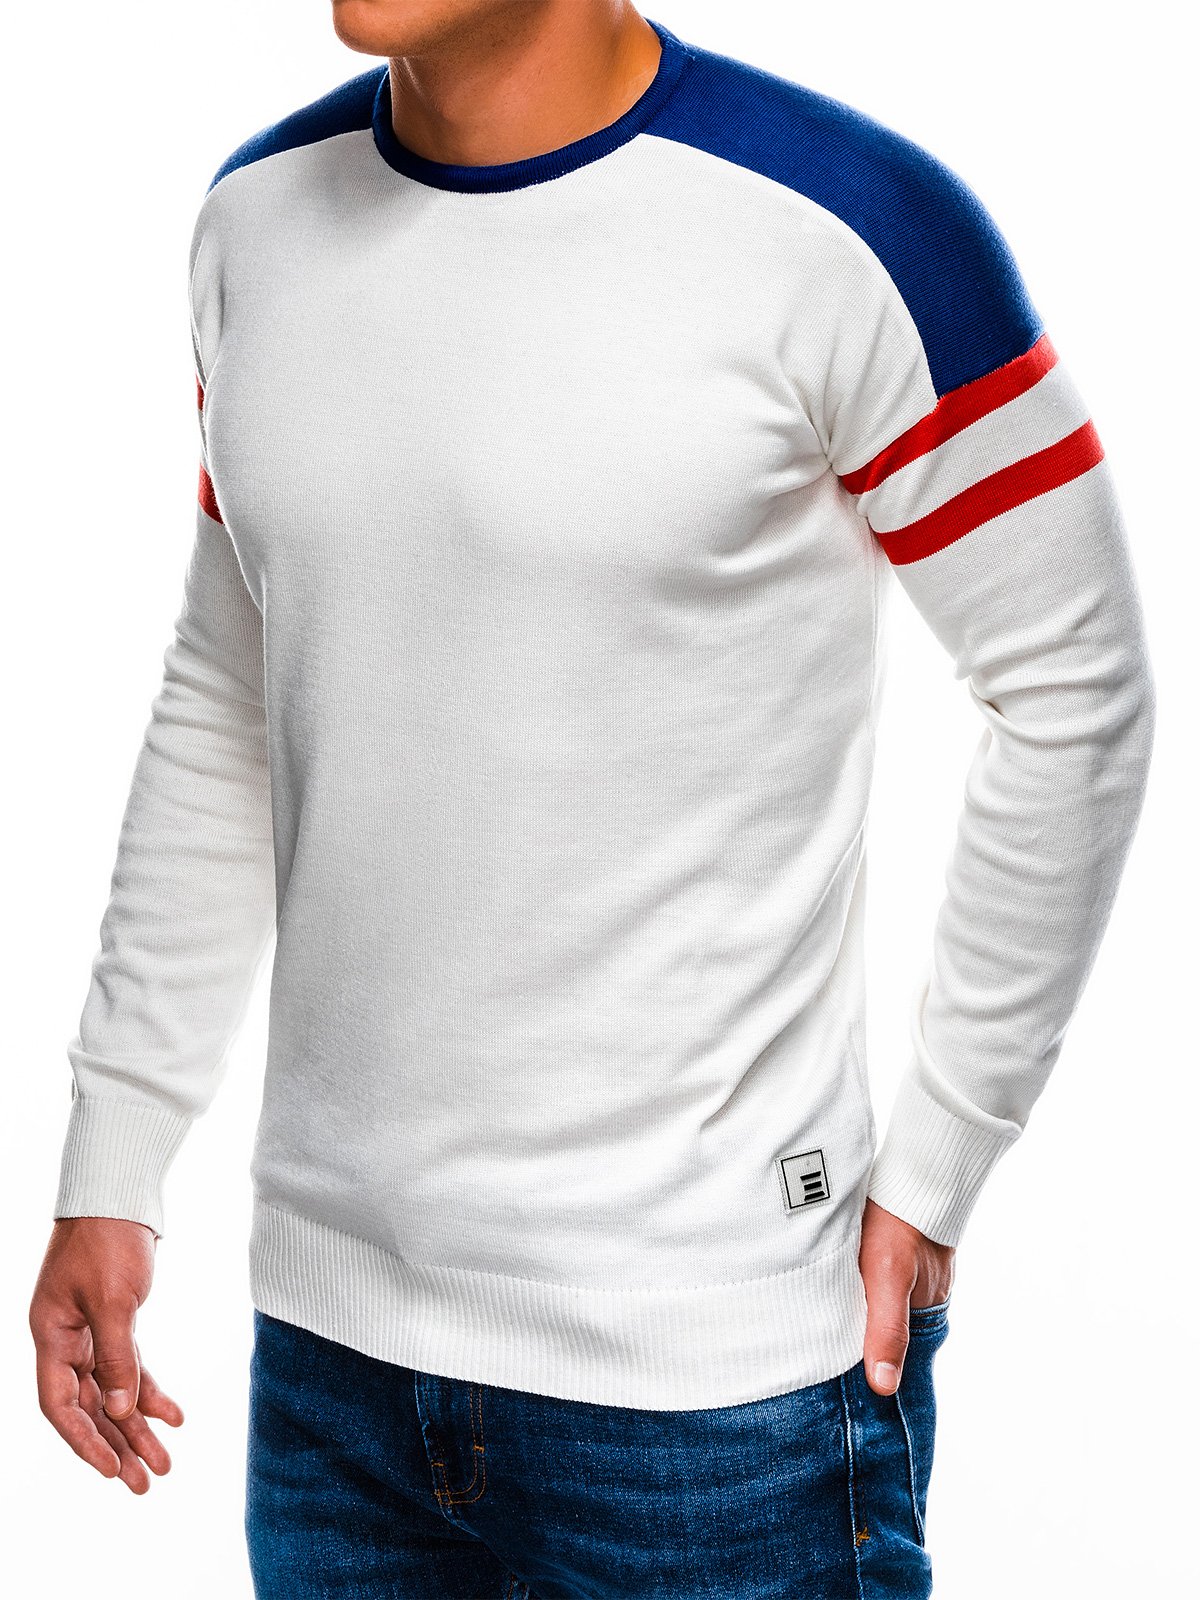 Men's sweater - white E146 | Ombre.com - Men's clothing online